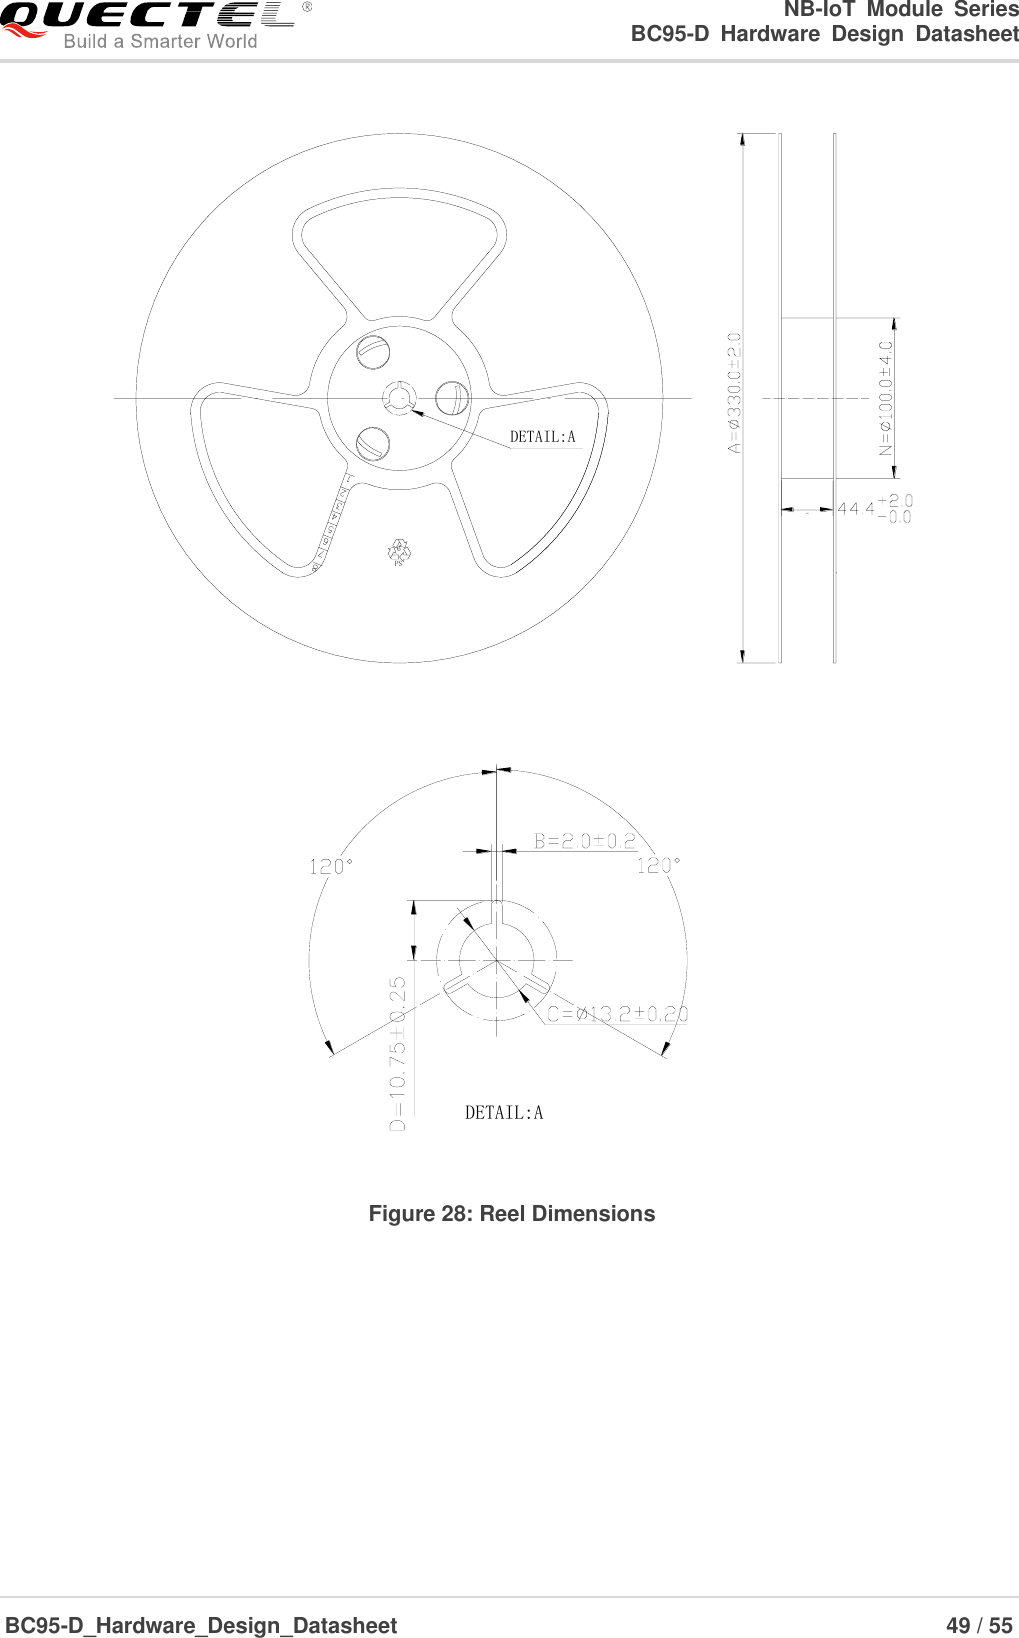                                                            NB-IoT  Module  Series                                                          BC95-D  Hardware  Design  Datasheet BC95-D_Hardware_Design_Datasheet                                                                    49 / 55    PS6DETAIL:A  DETAIL:A Figure 28: Reel Dimensions  